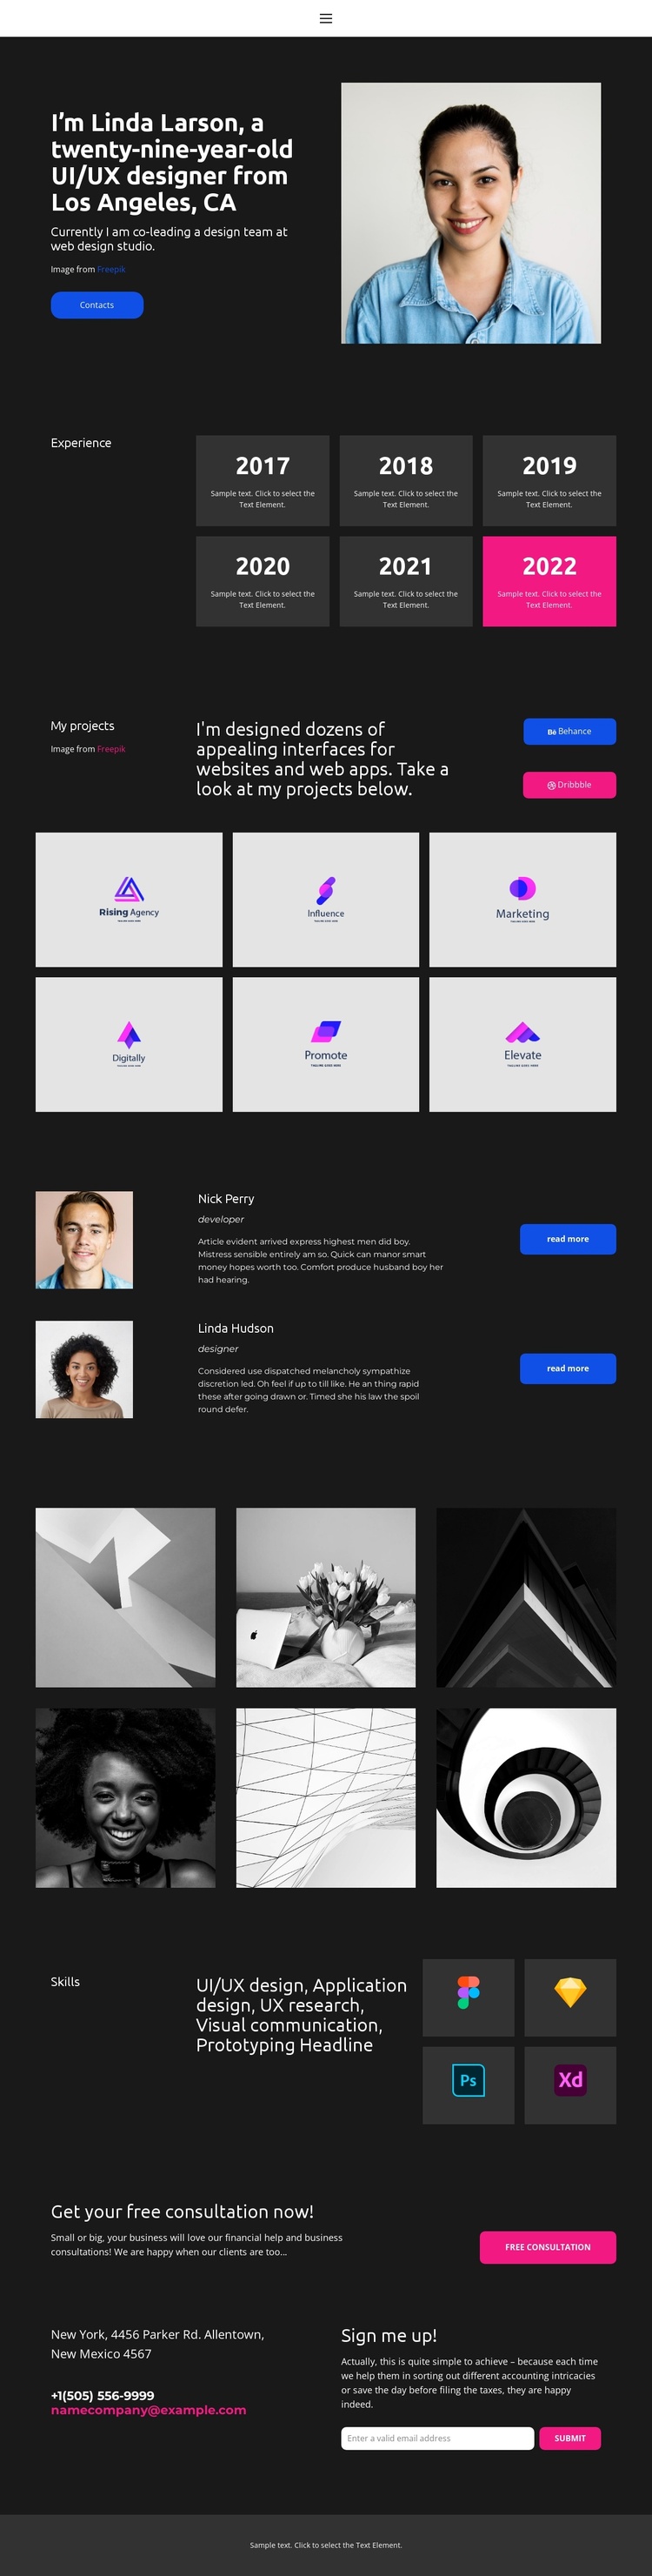 Web designer business card Joomla Template